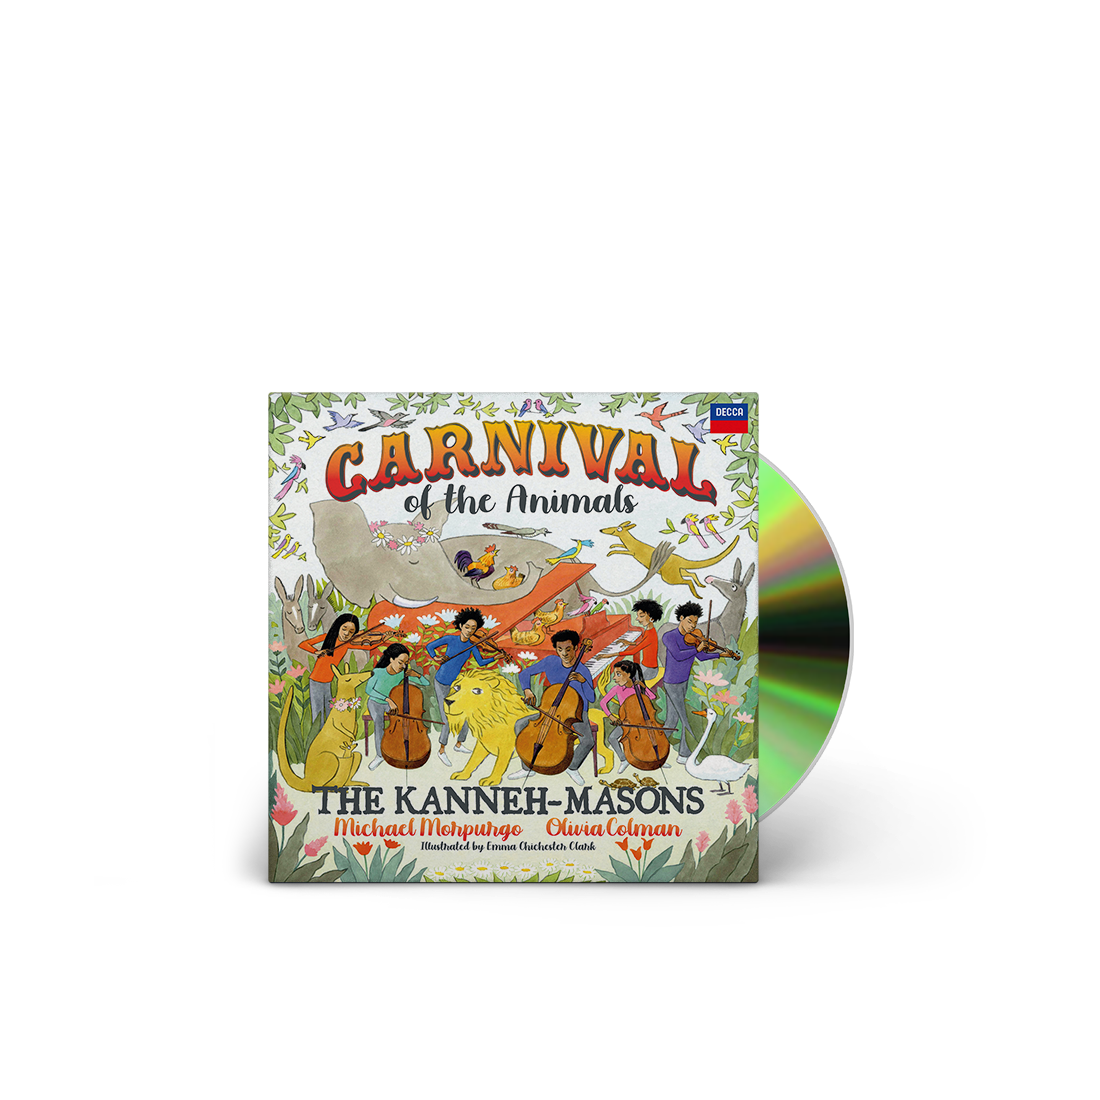 The Kanneh-Masons, Michael Morpurgo, Olivia Colman - Carnival of the Animals: CD